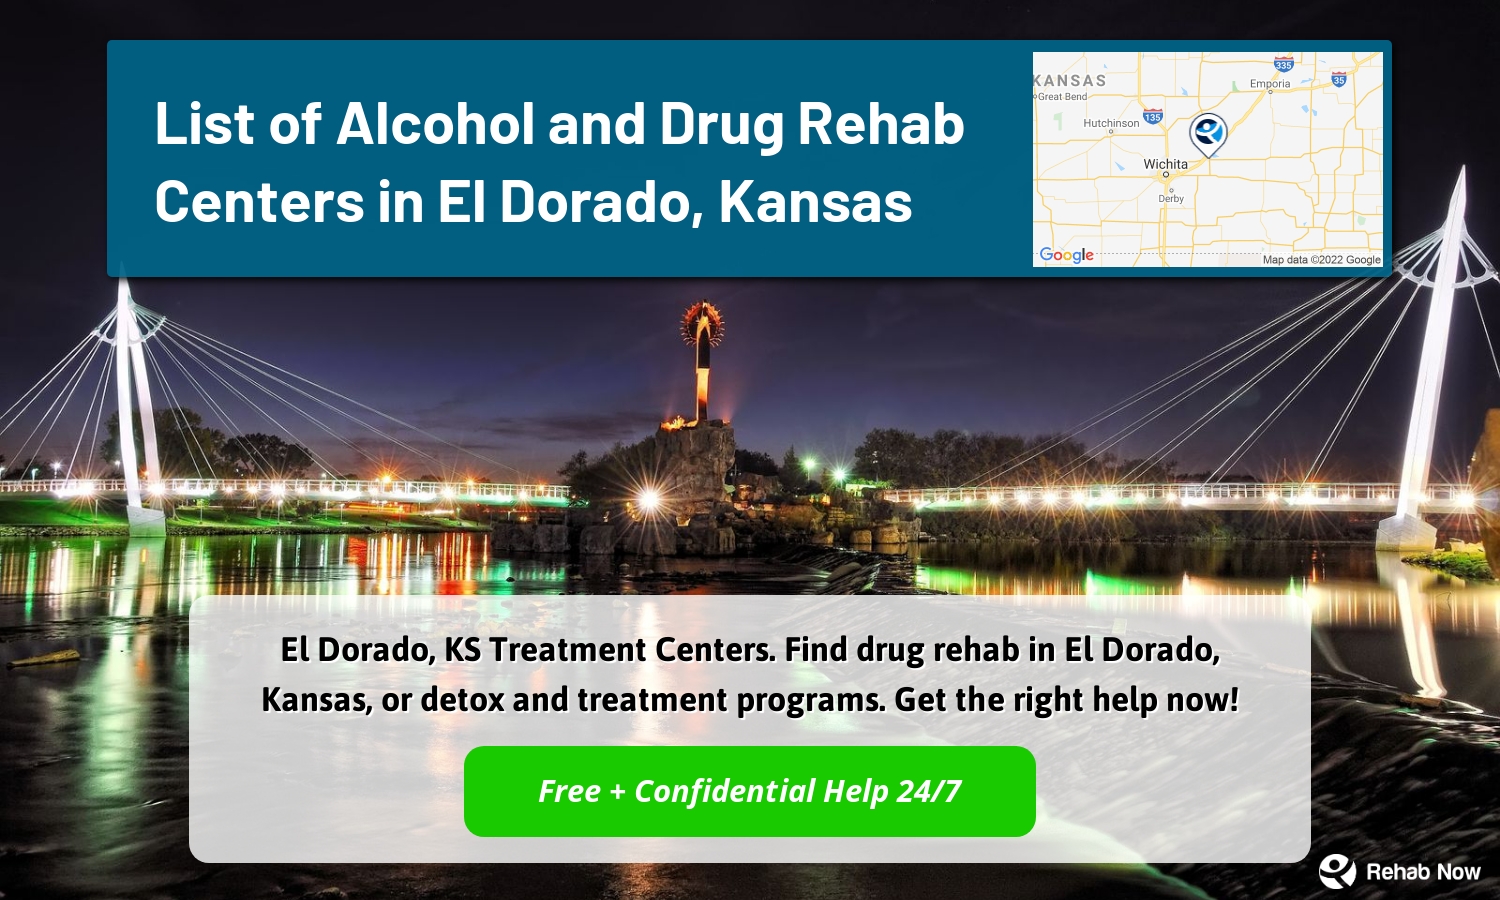 El Dorado, KS Treatment Centers. Find drug rehab in El Dorado, Kansas, or detox and treatment programs. Get the right help now!